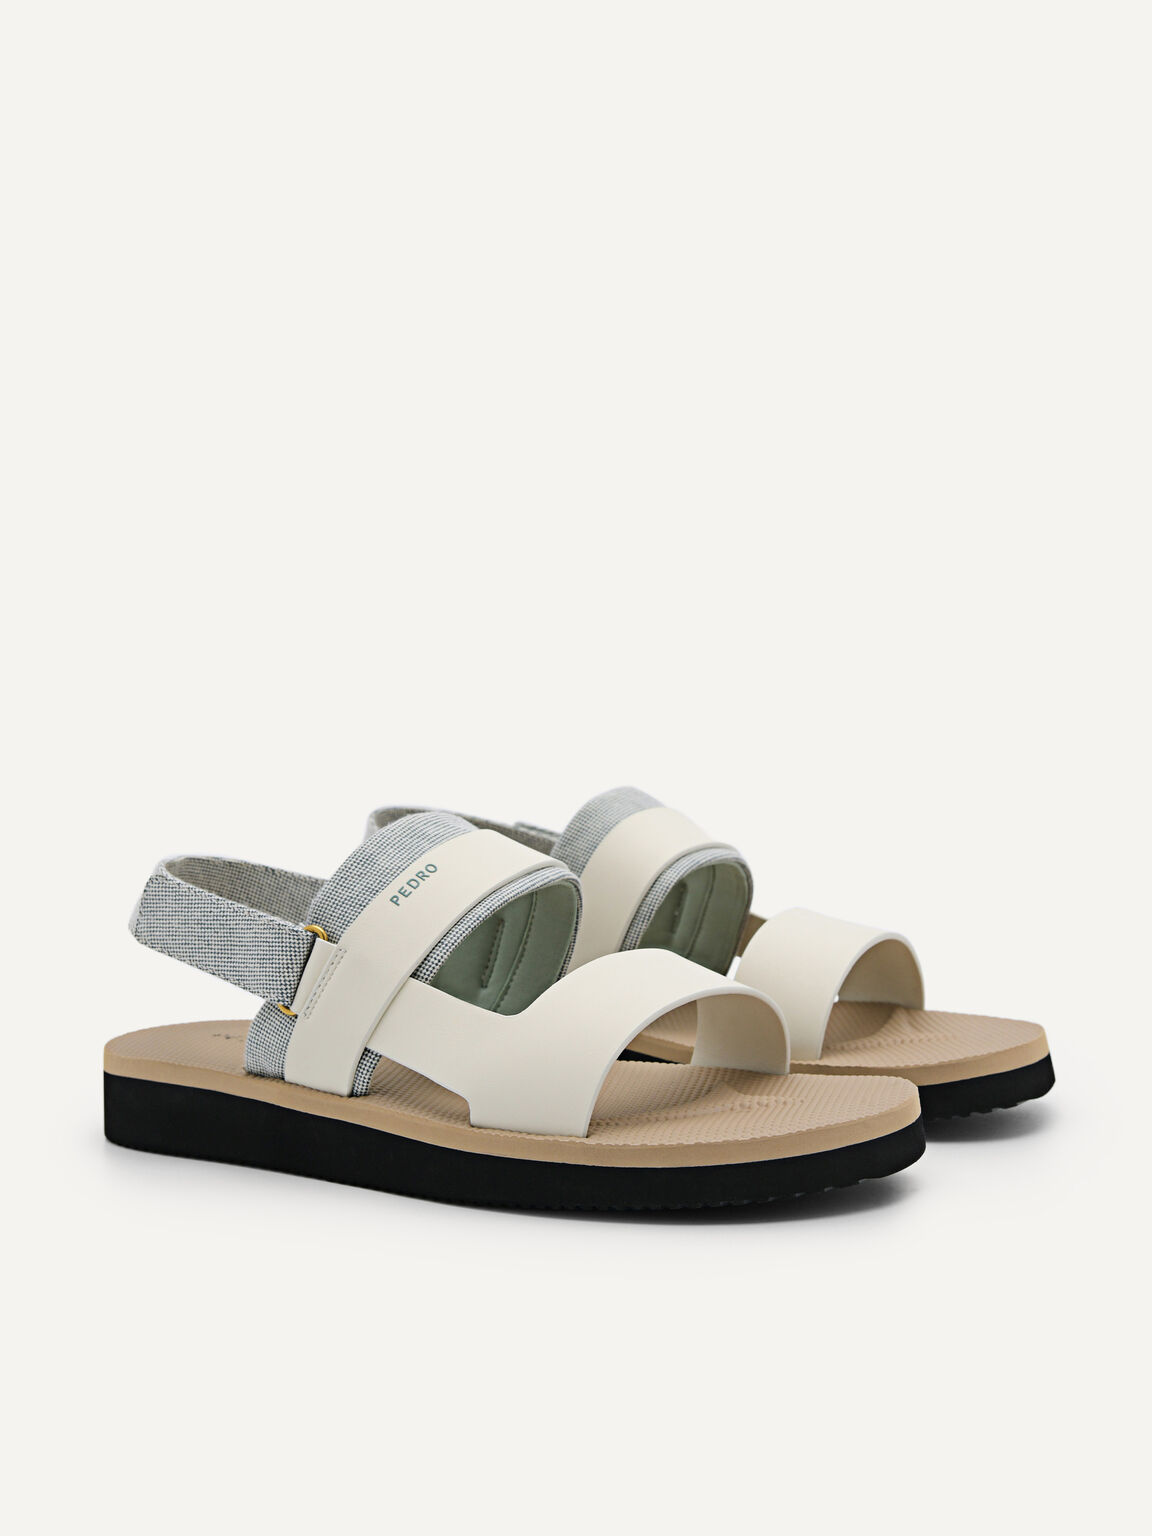 Backstrap Sandals, Turquoise